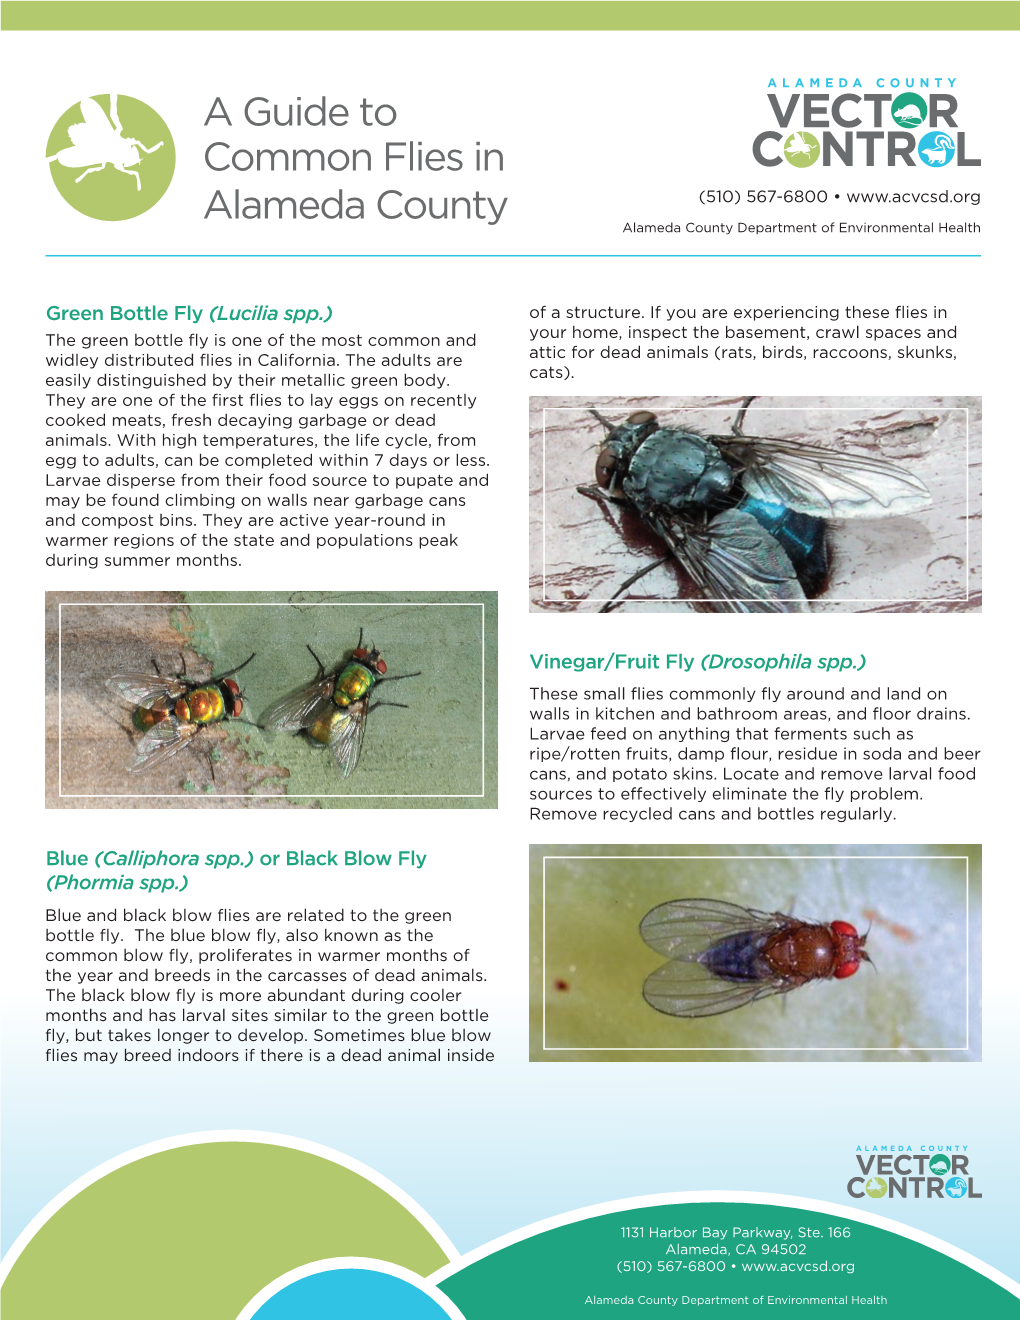 Common Flies in Alameda County (510) 567-6800 • Alameda County Department of Environmental Health